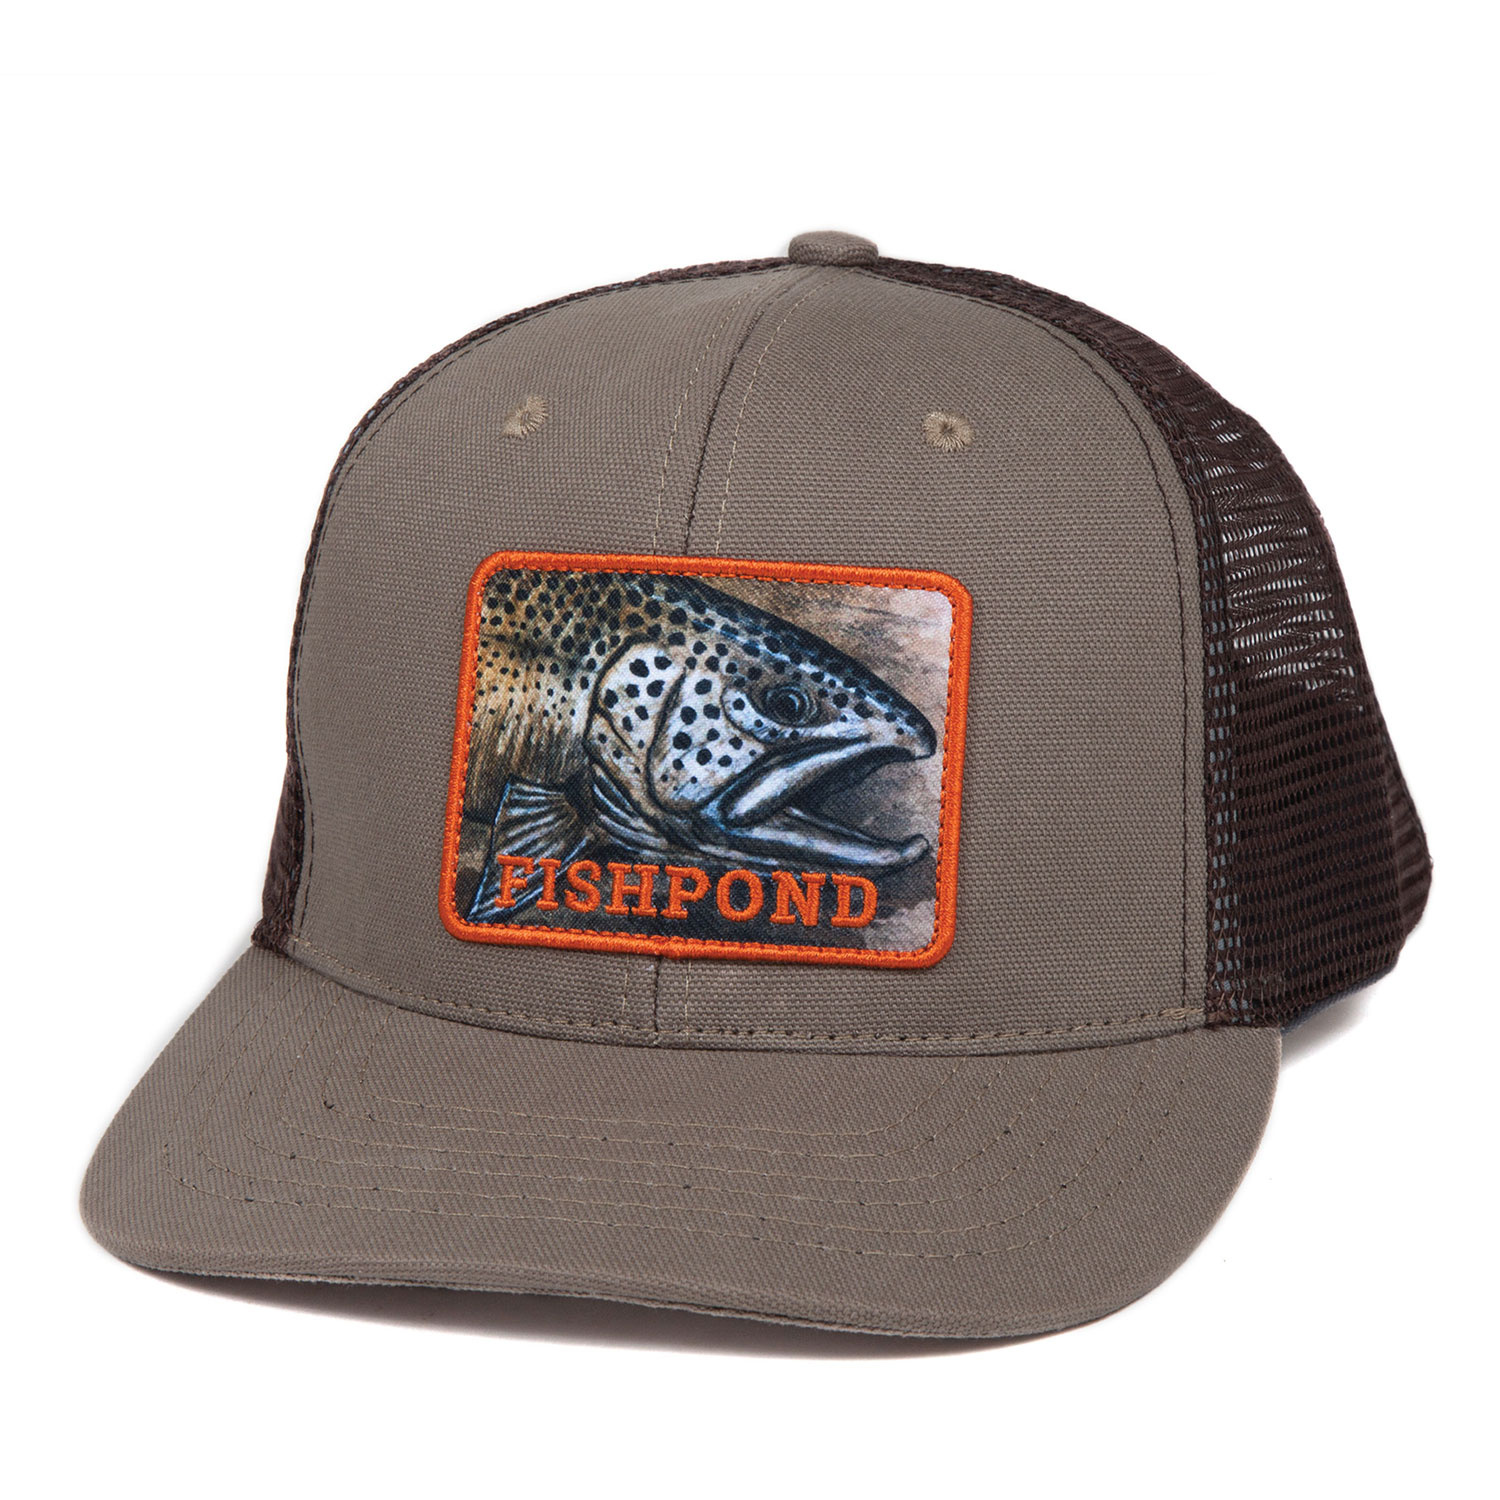 Fishpond Slab Trucker Hat -Sandstone/Brown